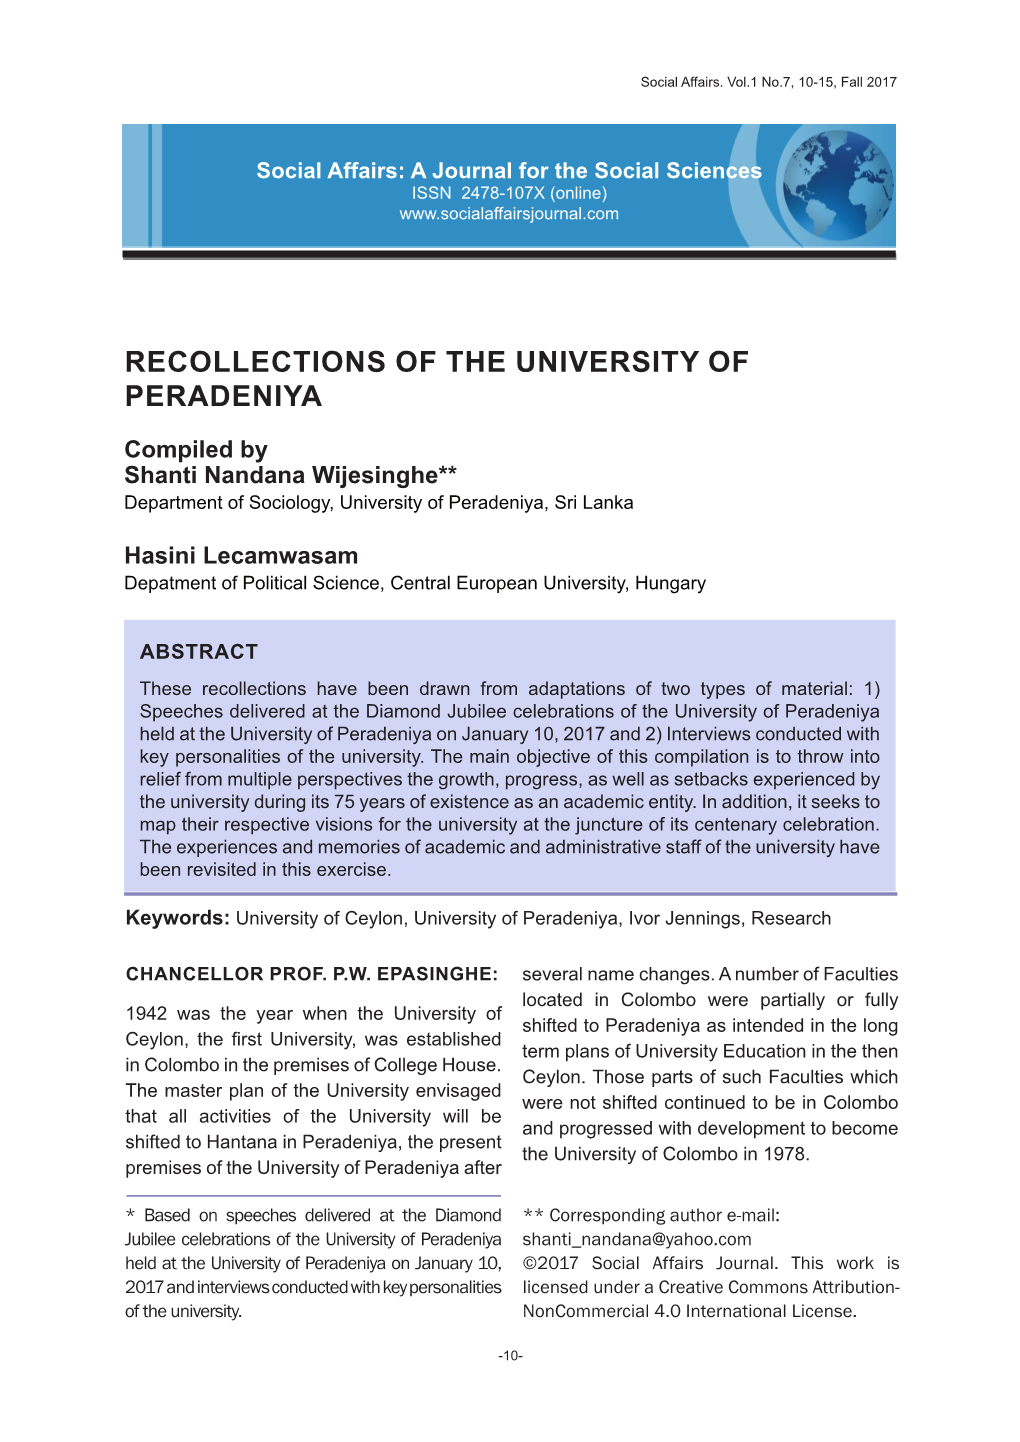 Recollections of the University of Peradeniya